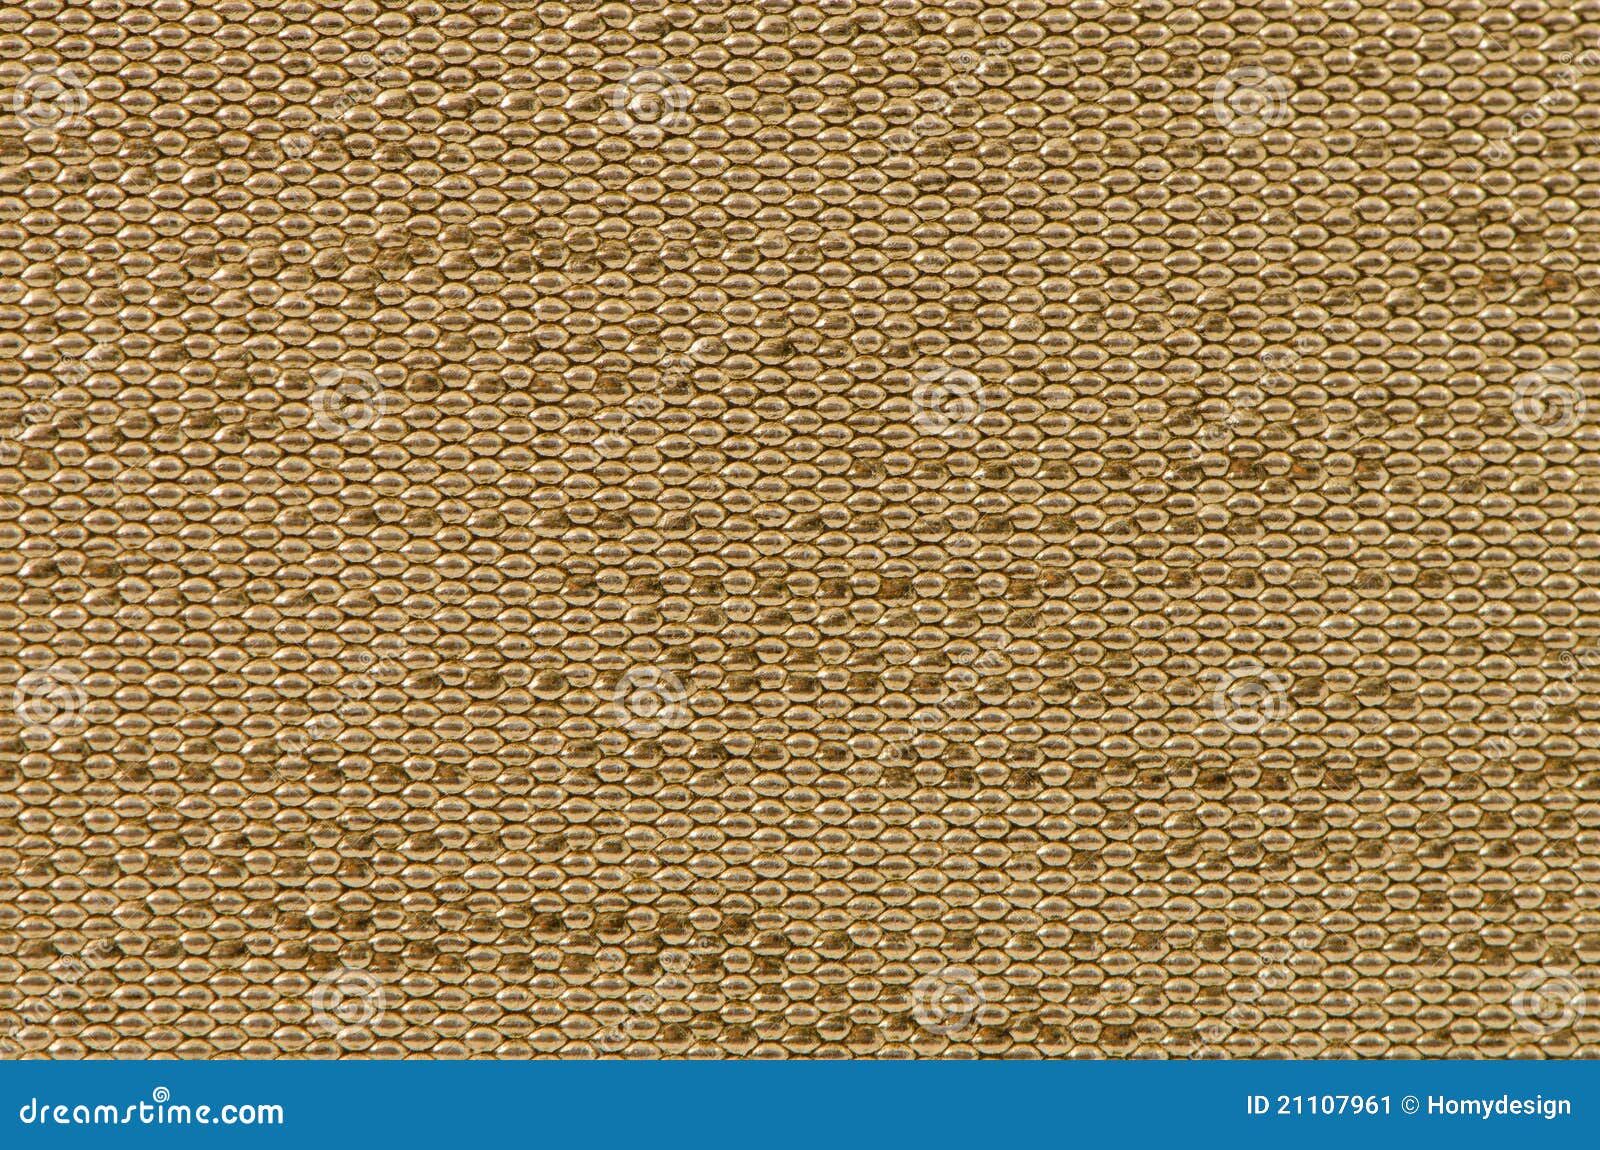 Golden mesh pattern stock image. Image of precious, metallic - 21107961